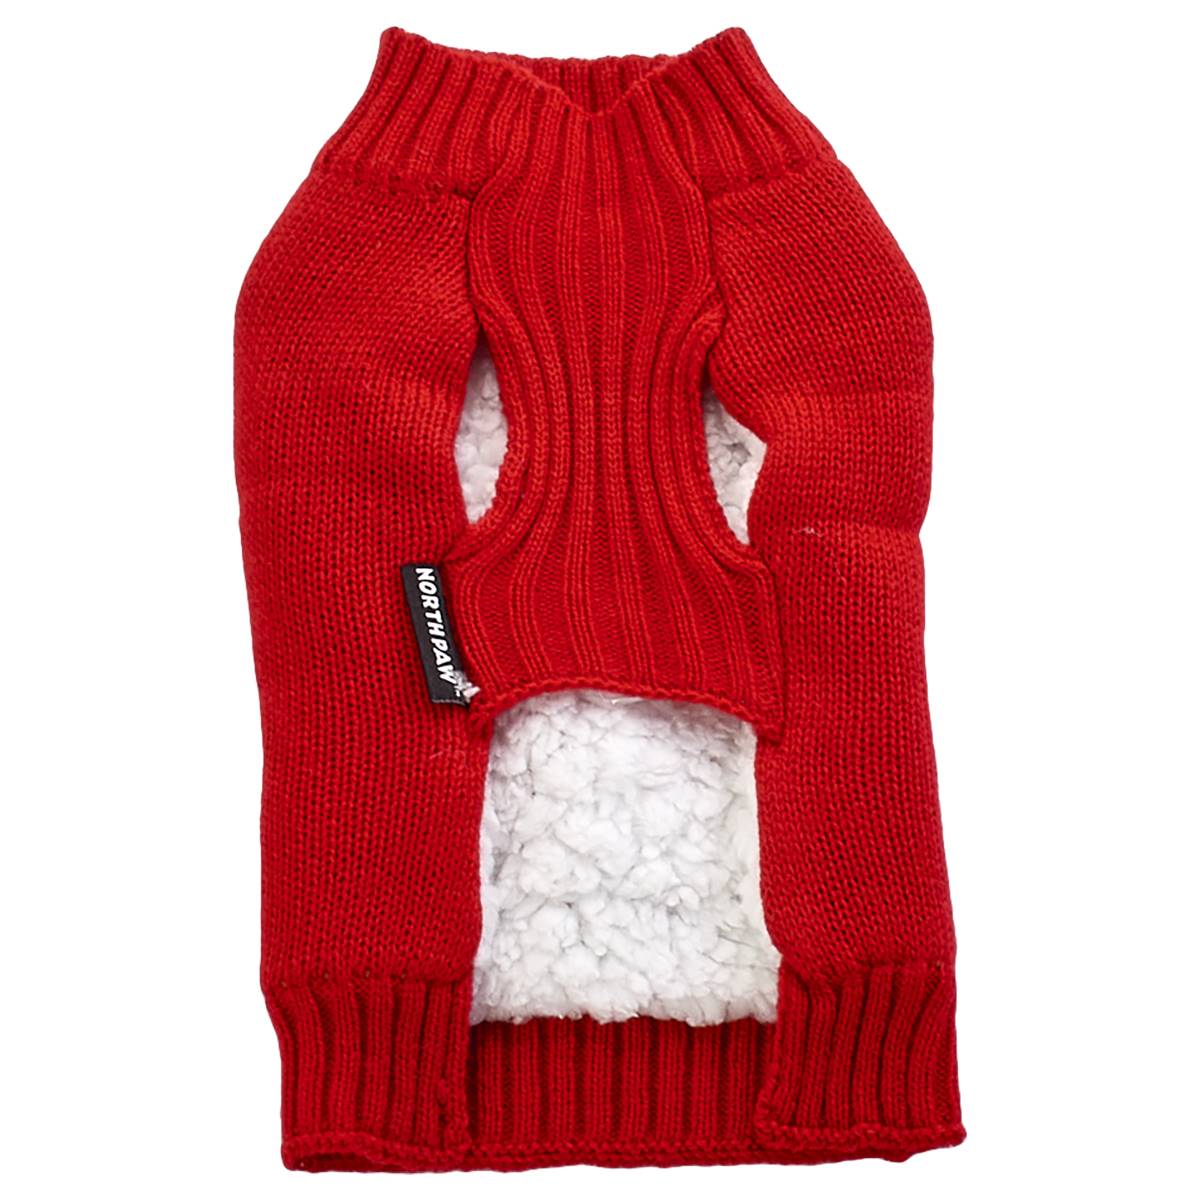 Northpaw Reindeer Jacquard Christmas Pet Sweater